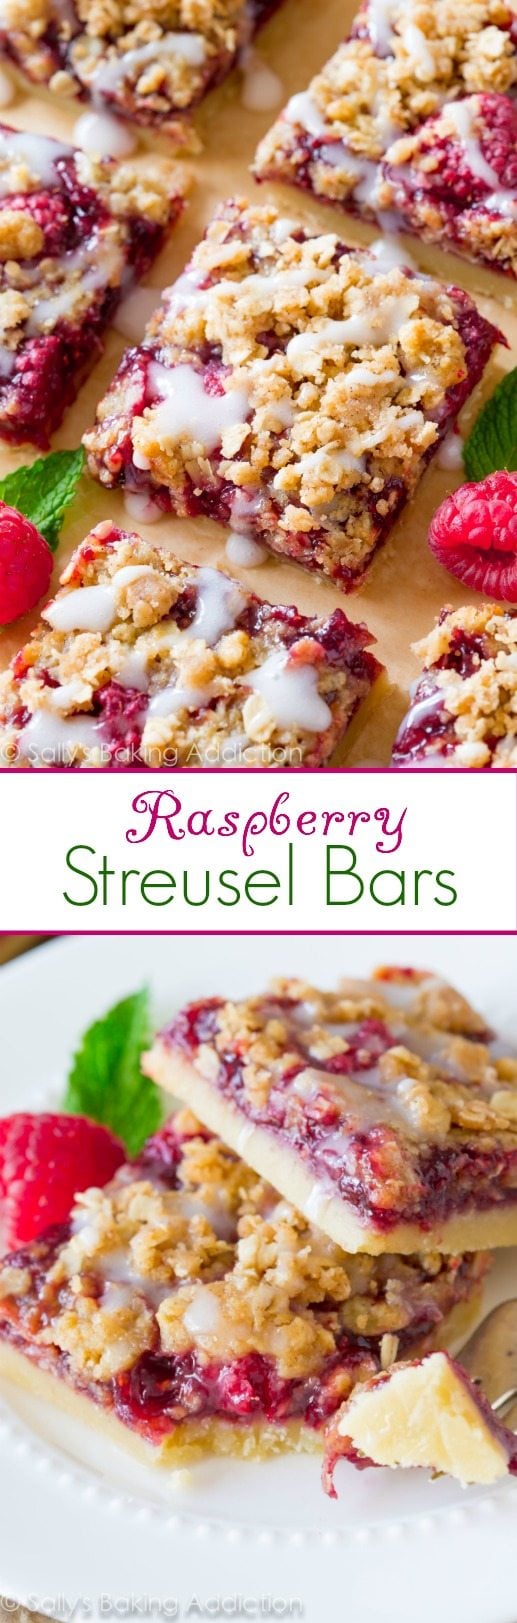 2 images of raspberry streusel bars